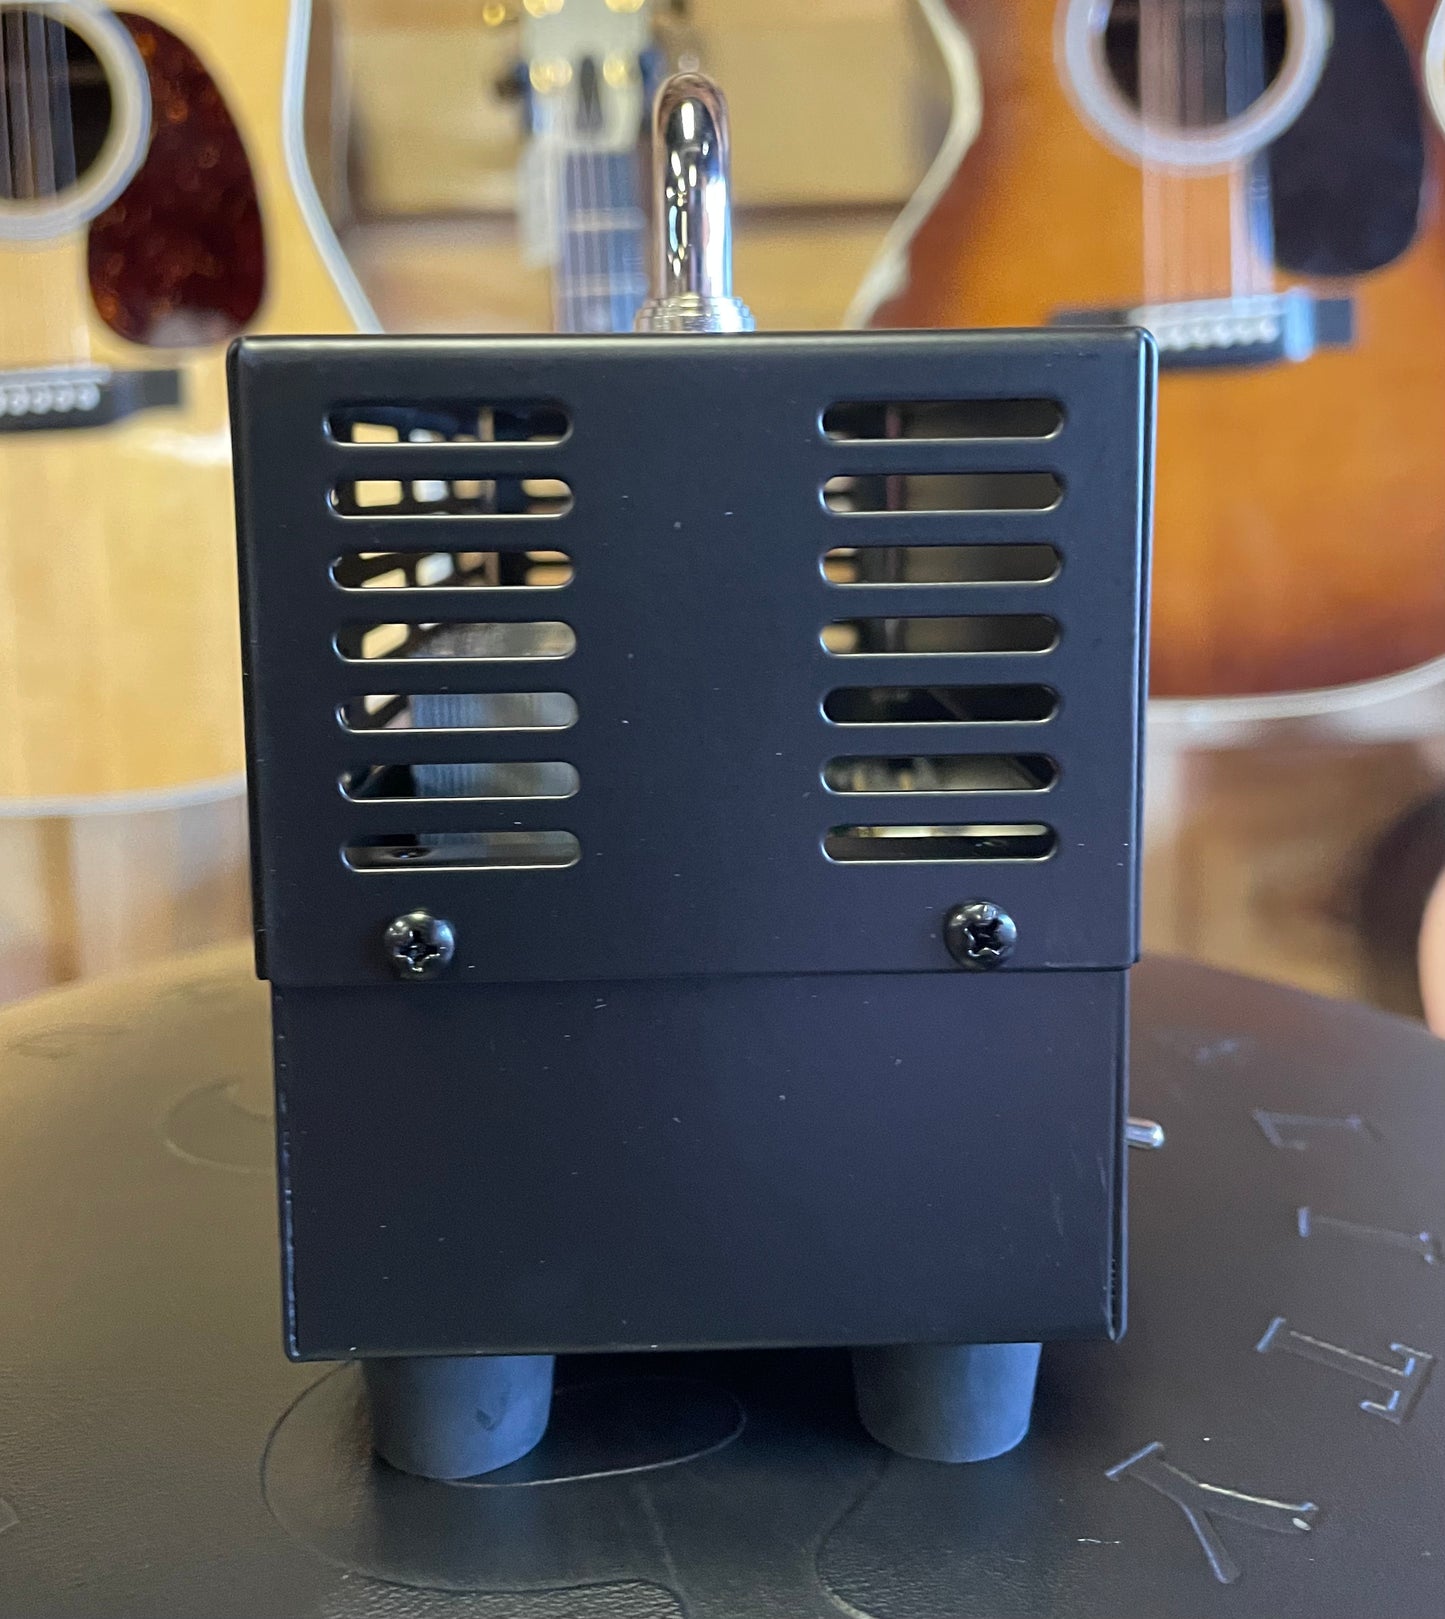 Orange Micro Dark 20-Watt Hybrid Guitar Amp Head (NEW)